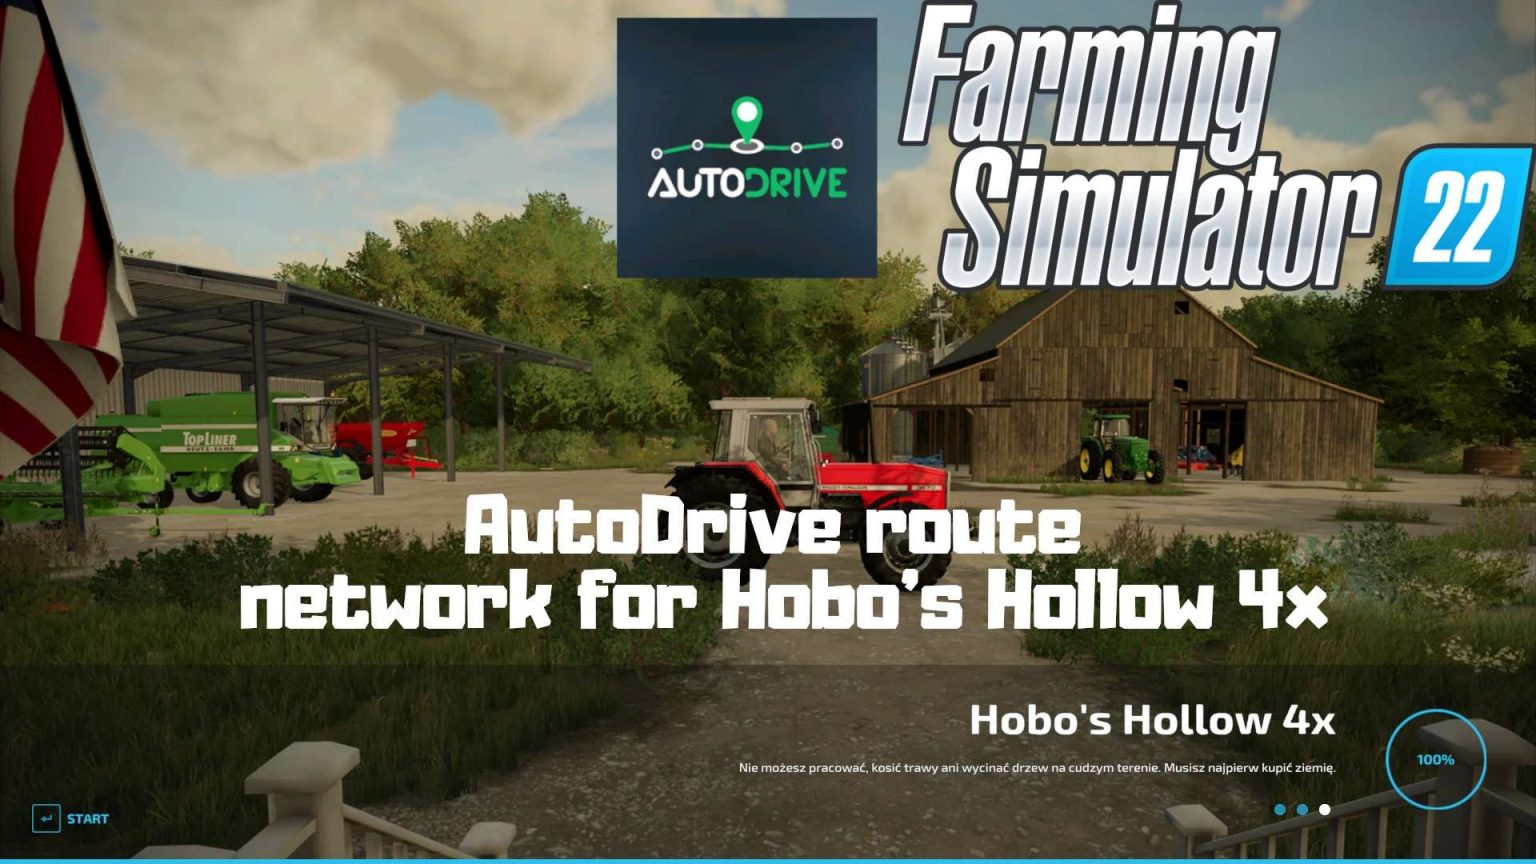 Autodrive Route Network For Hobos Hollow 4x V10 Fs22 Farming Simulator 22 Mod Fs22 Mod 0986